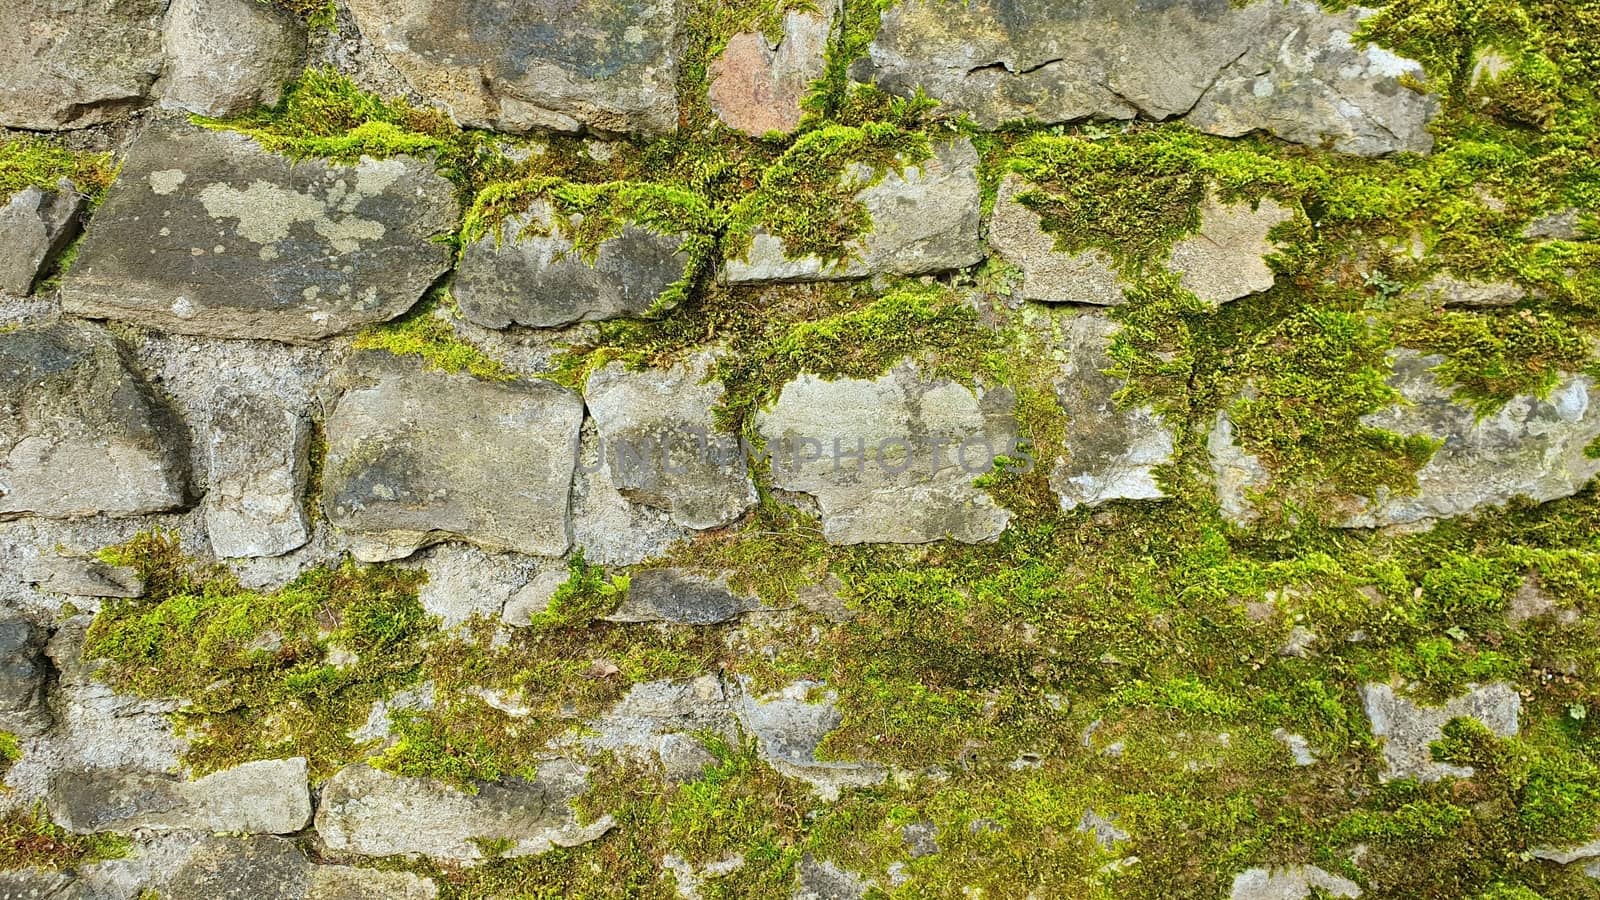 Mossy Stone Wall by hamik